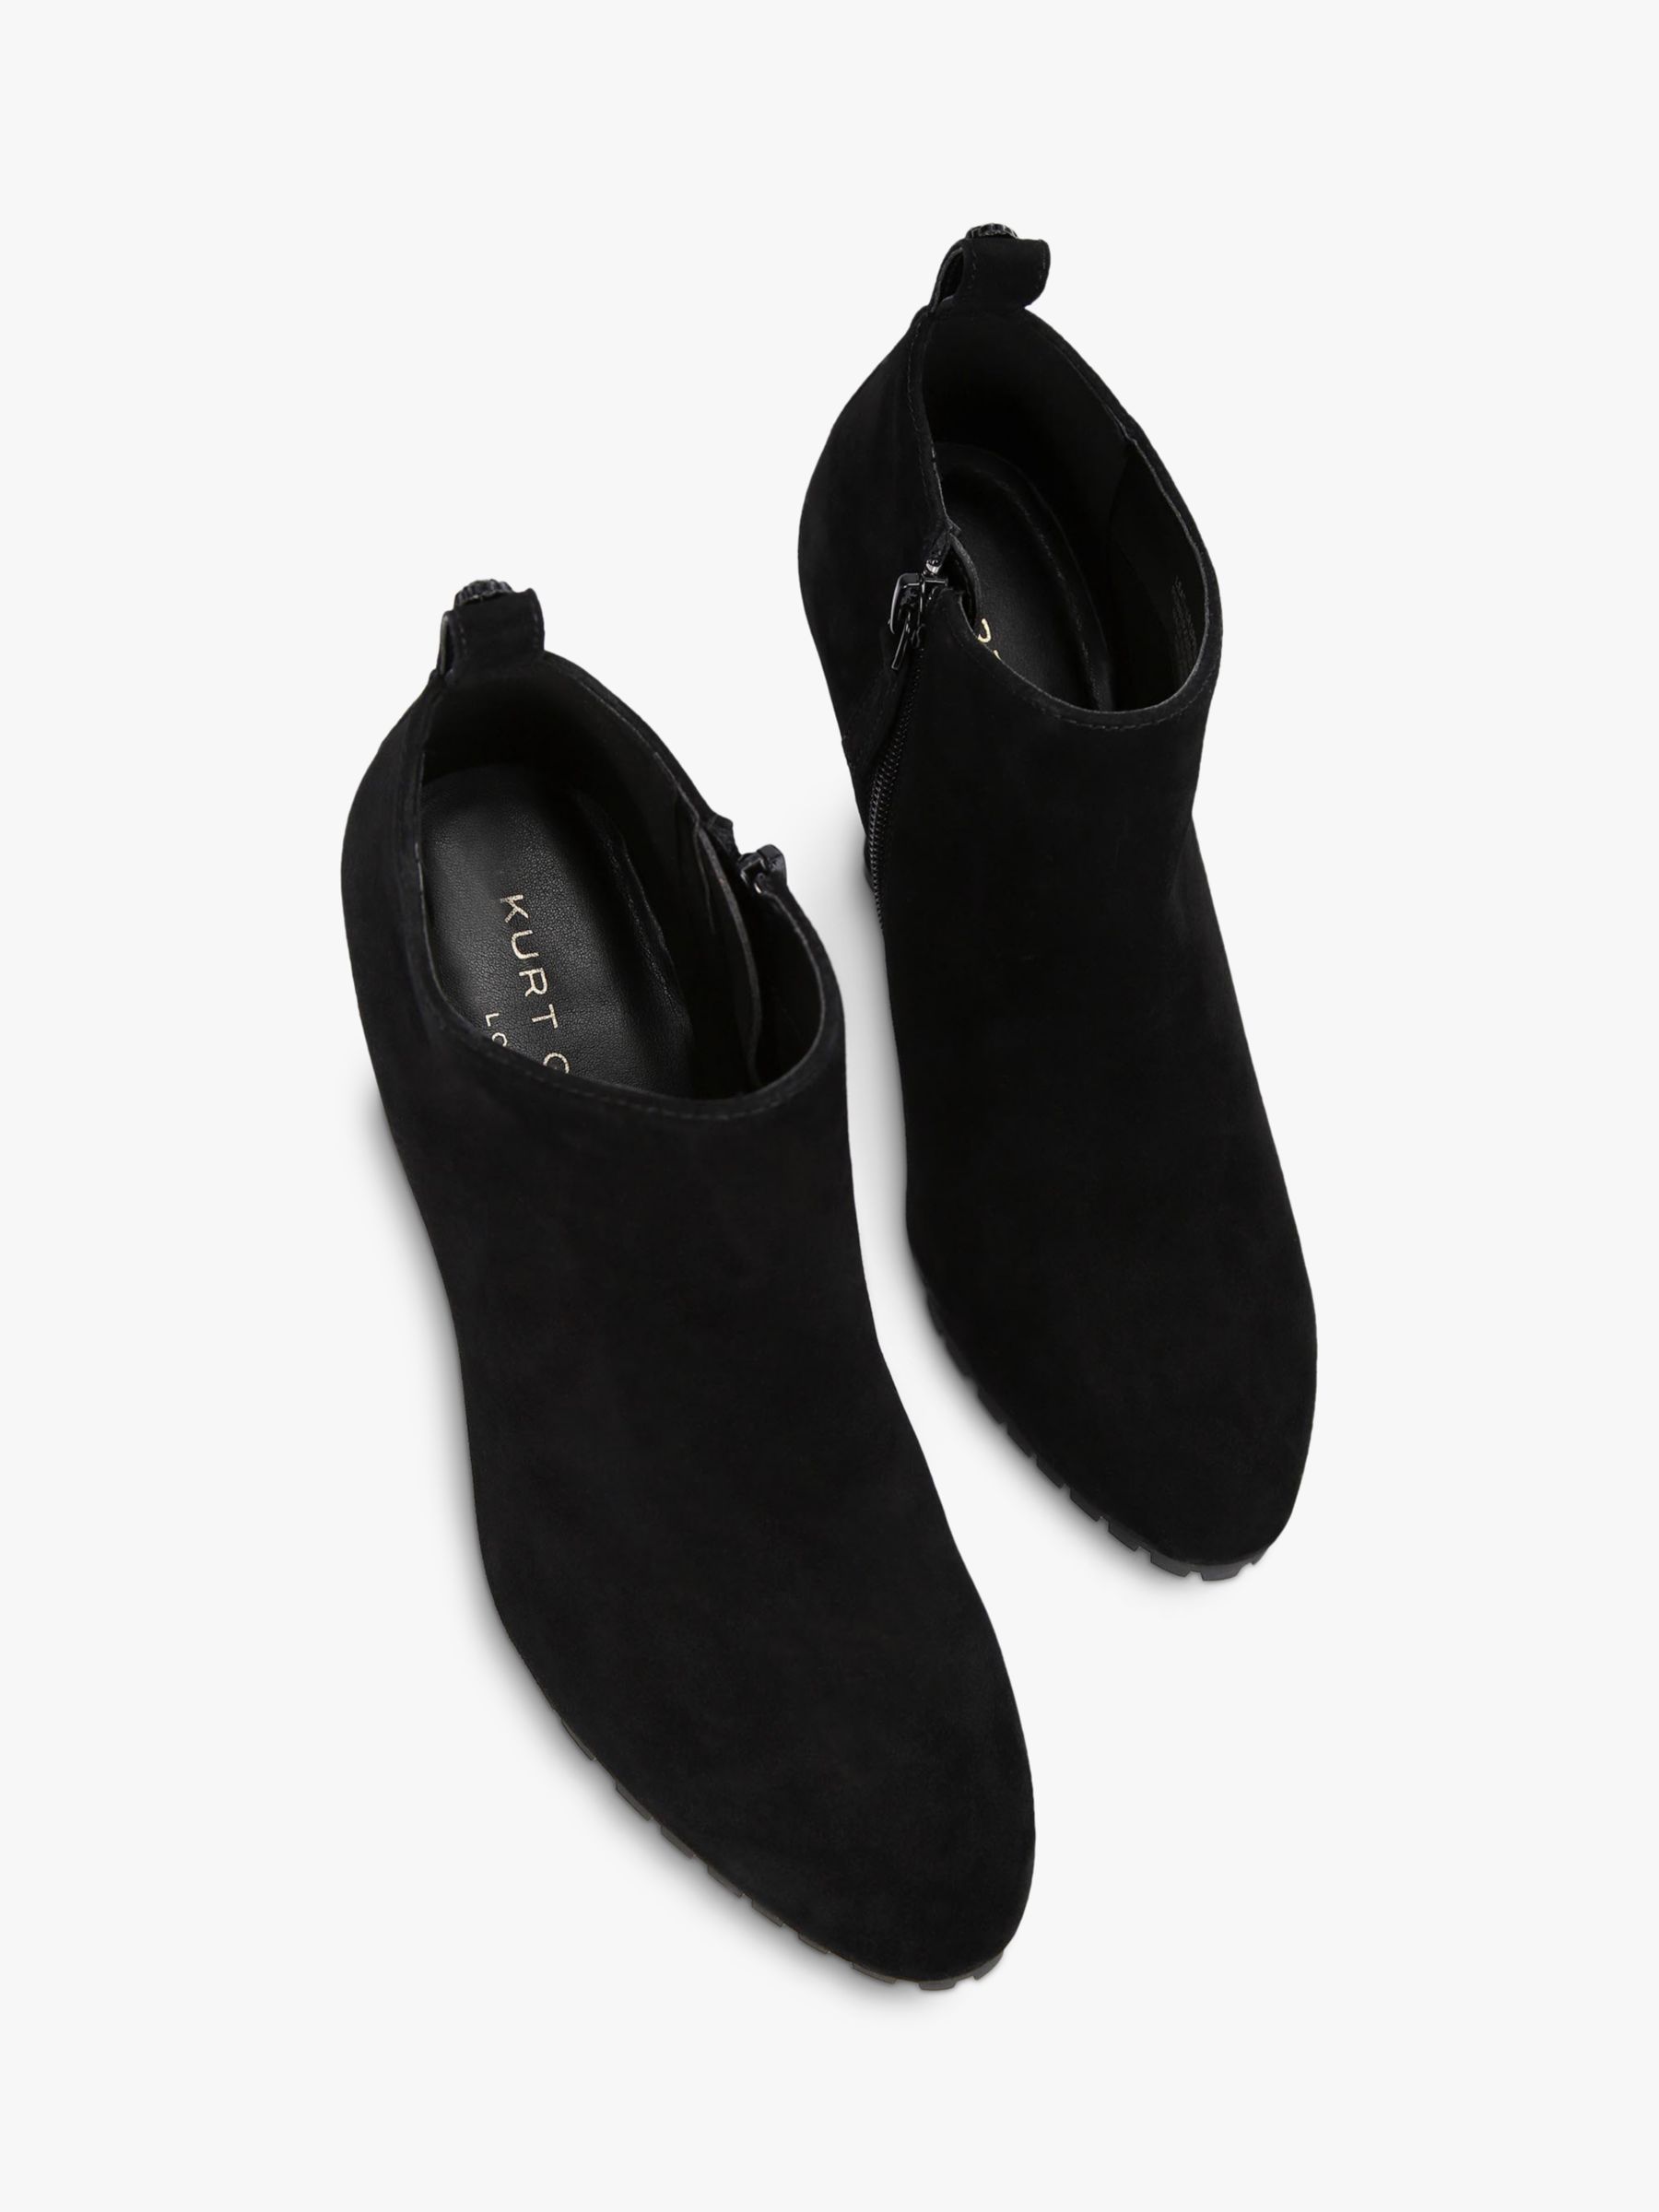 Kurt Geiger London Shoreditch Suede Shoe Boots, Black, 3